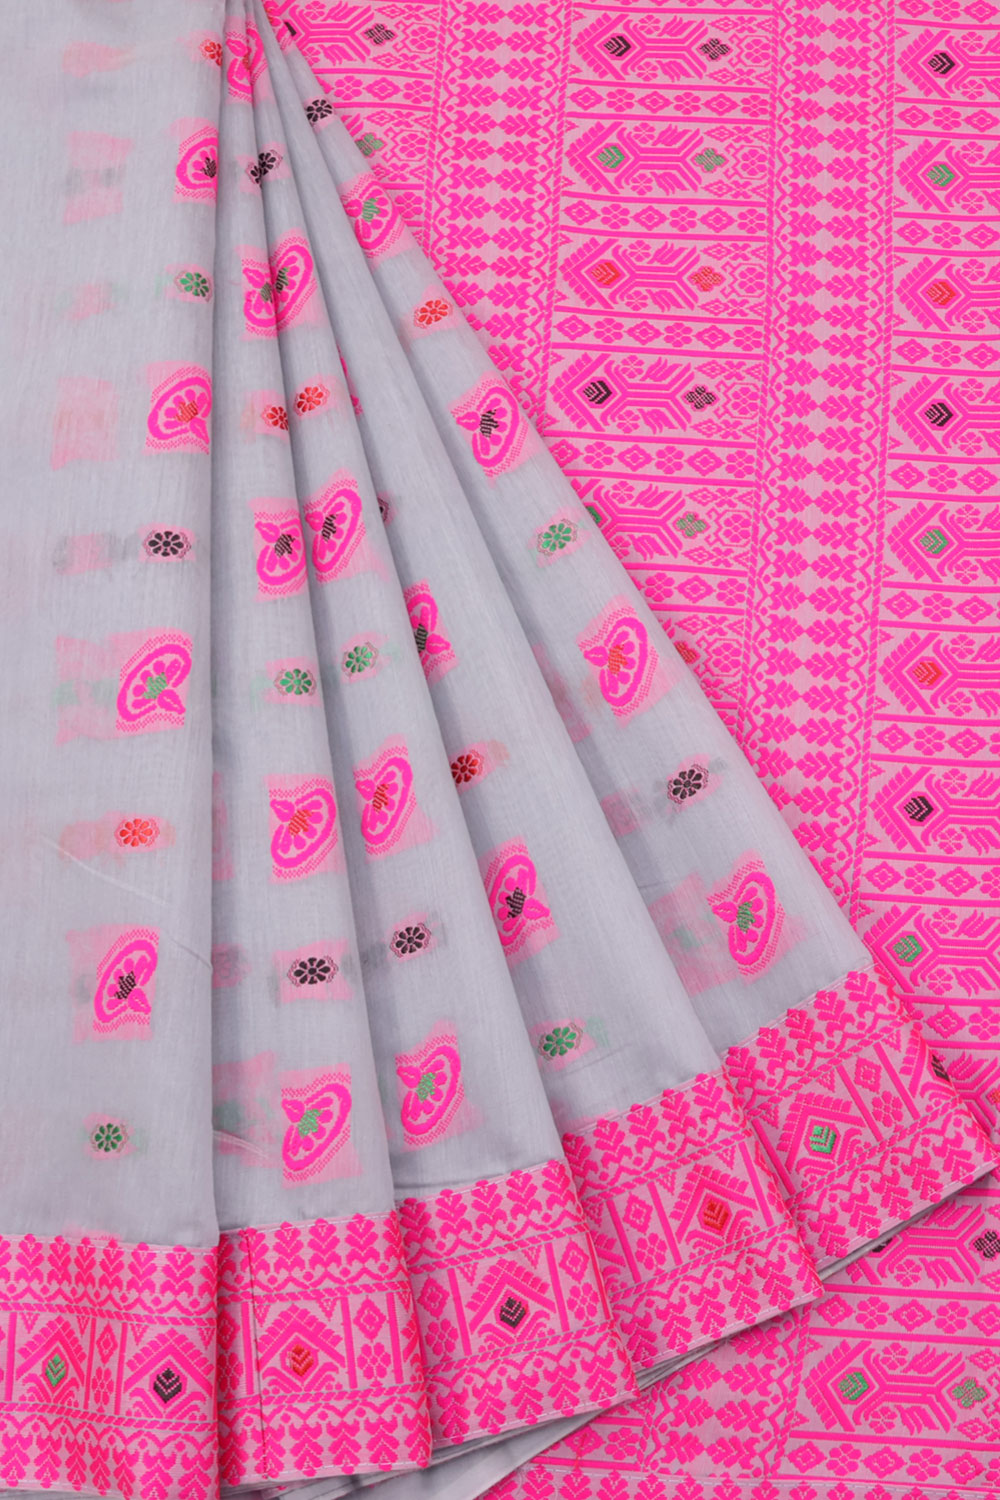 Assam Eri Silk Cotton Saree with Floral Motifs Design and Embroidered Pallu 